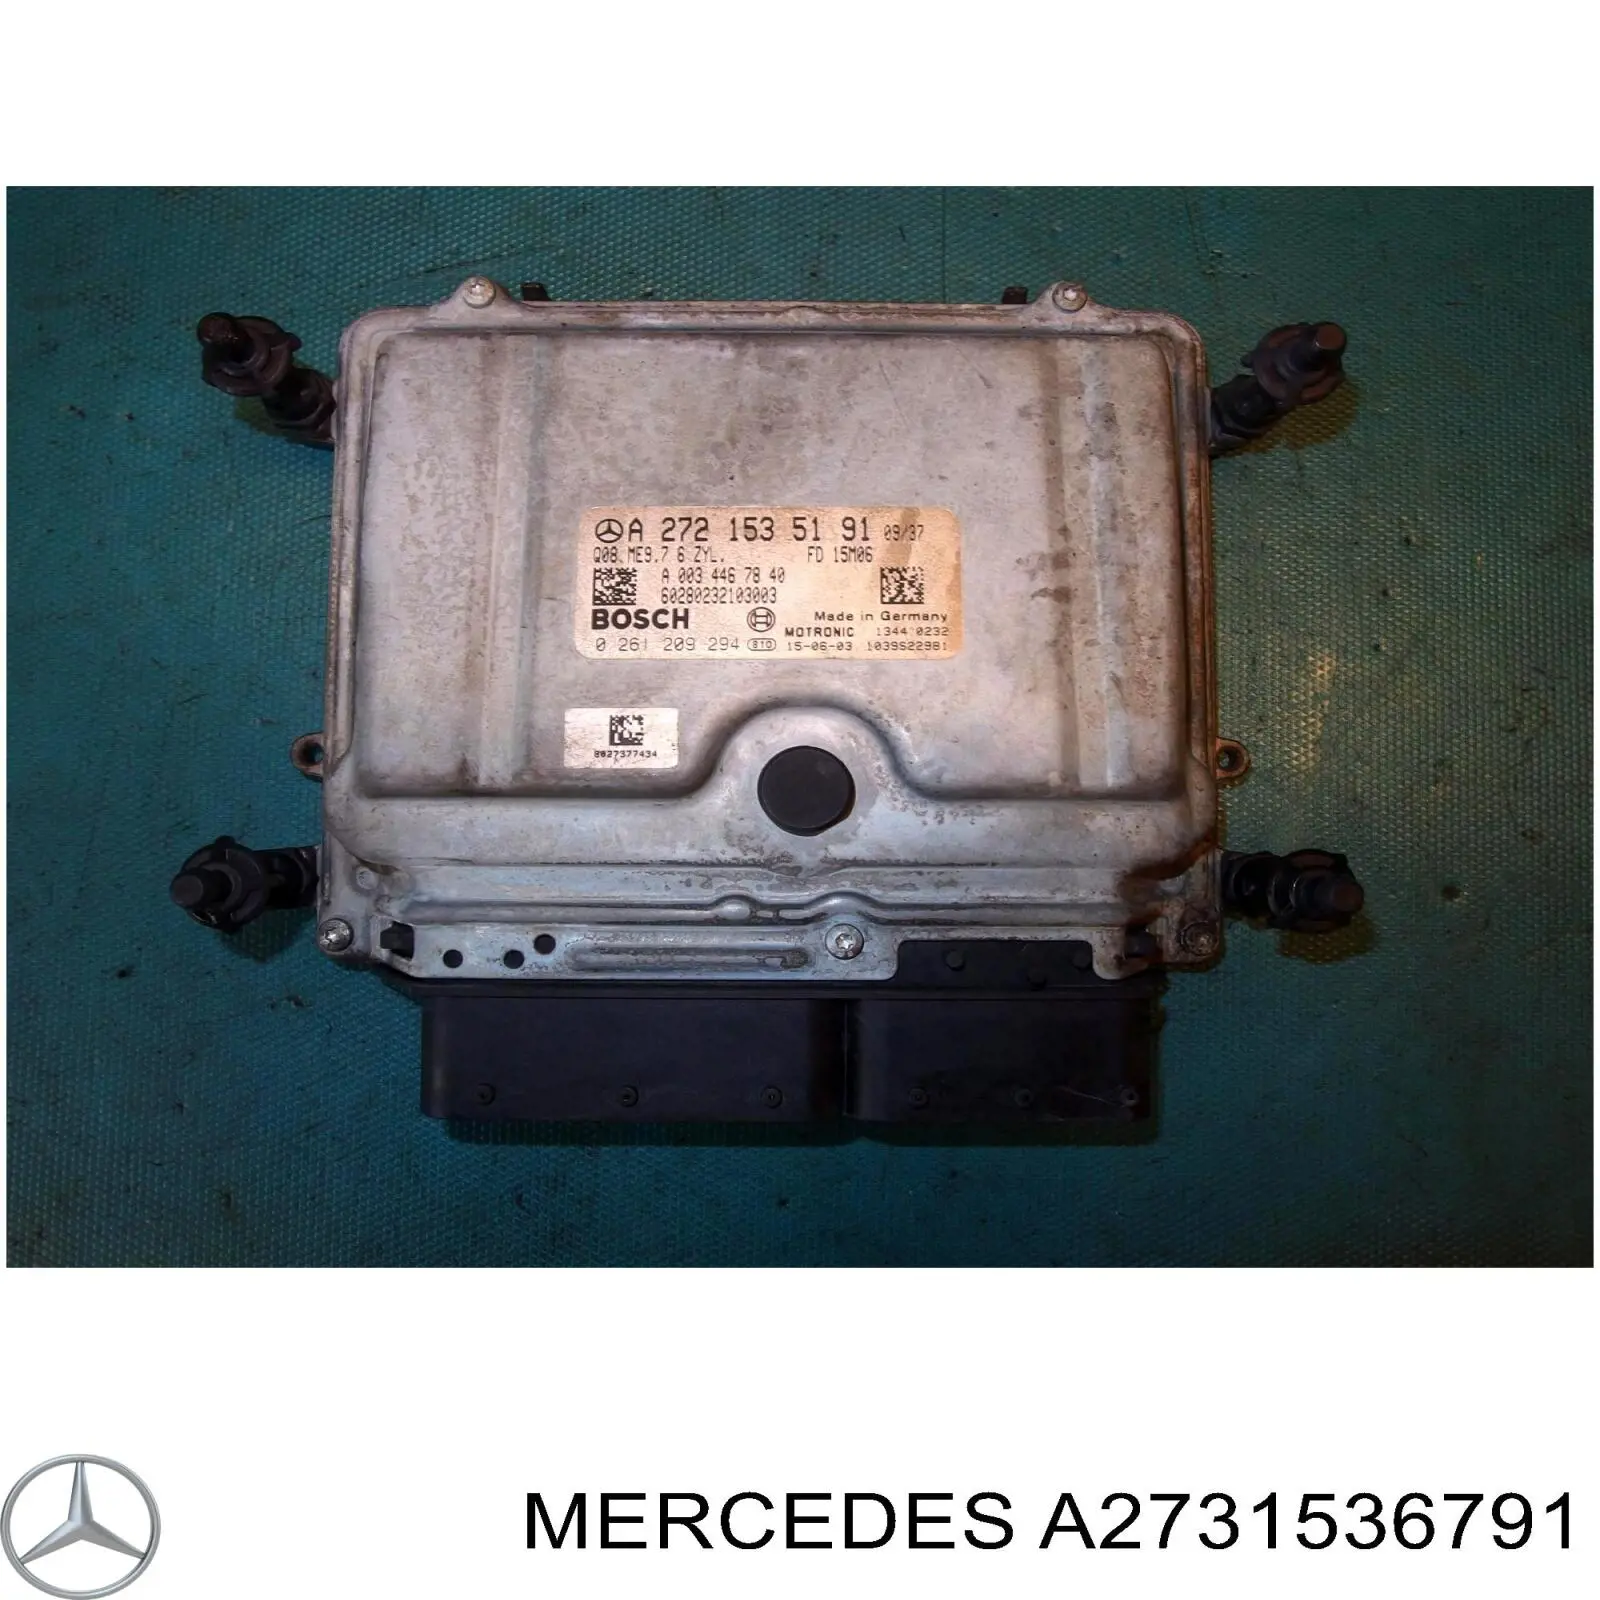 A2731536791 Mercedes